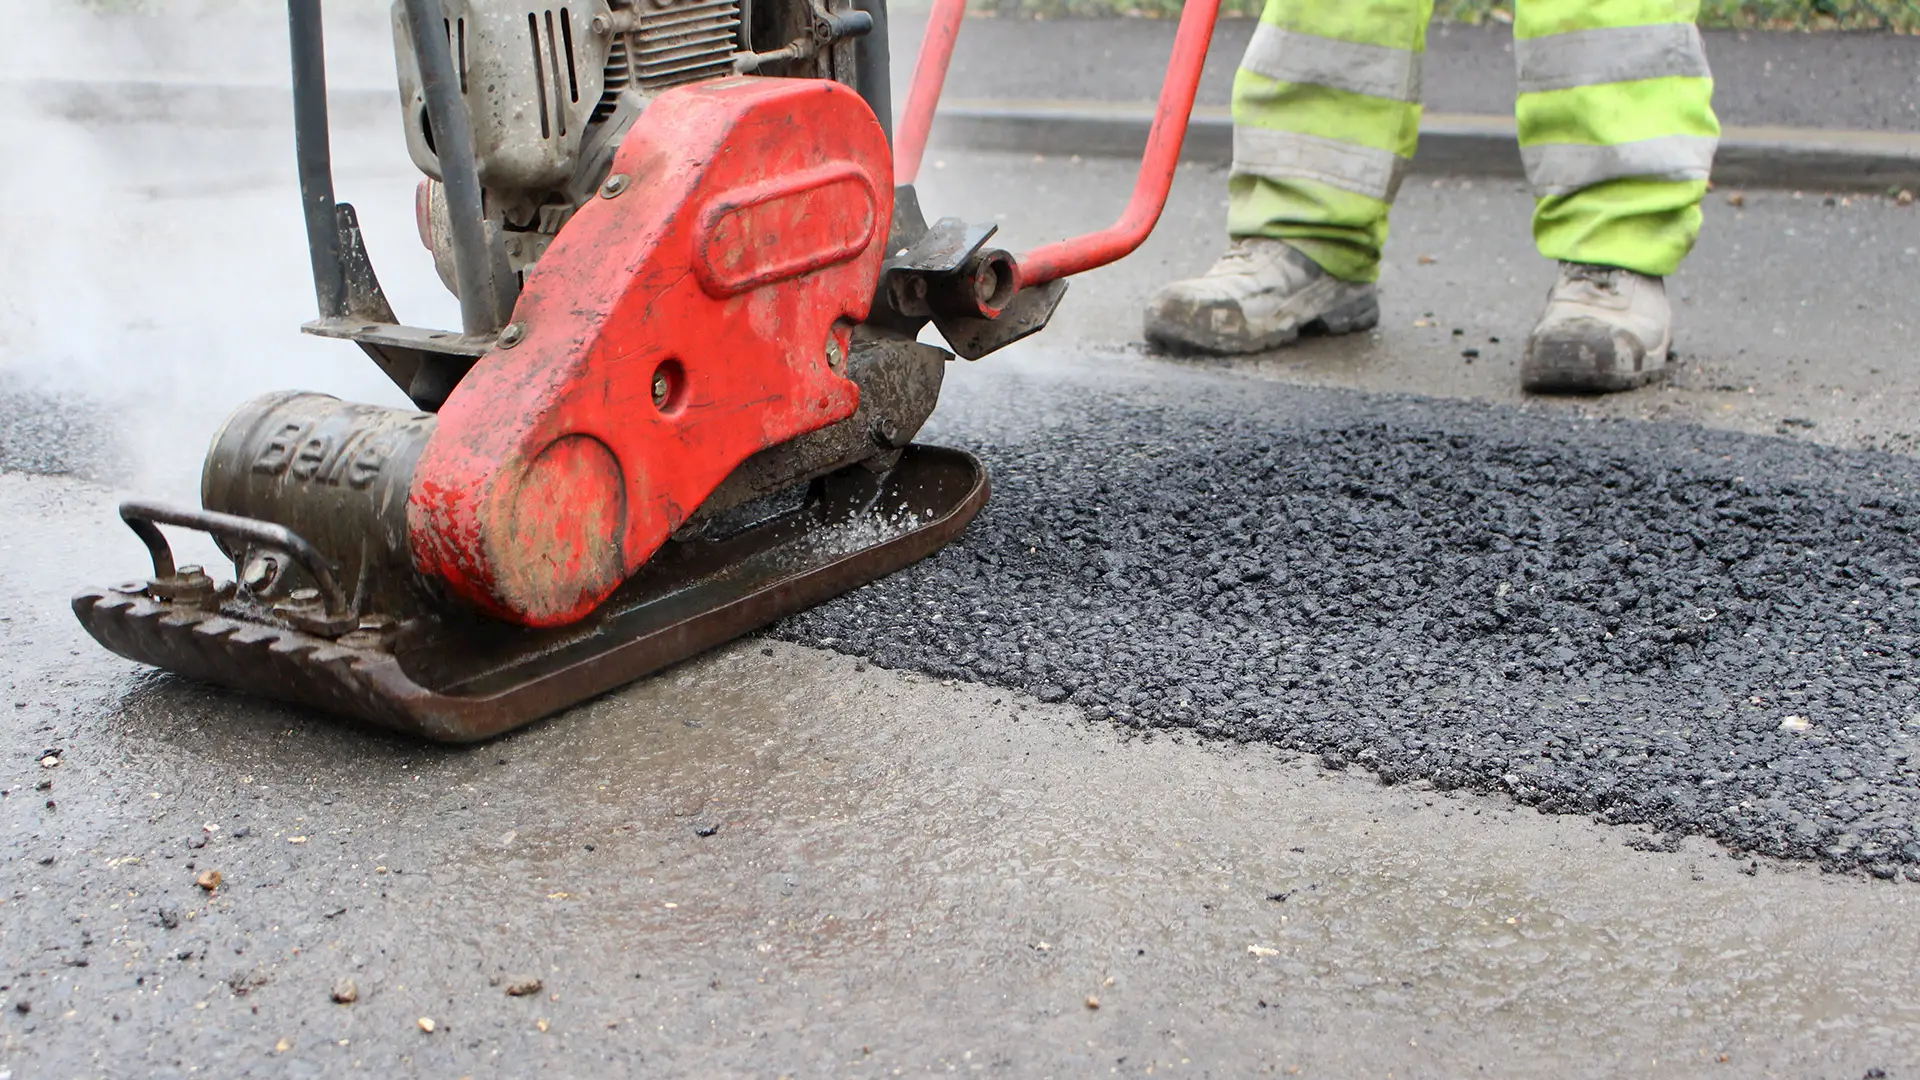 Experienced pothole repair contractors in Dudley